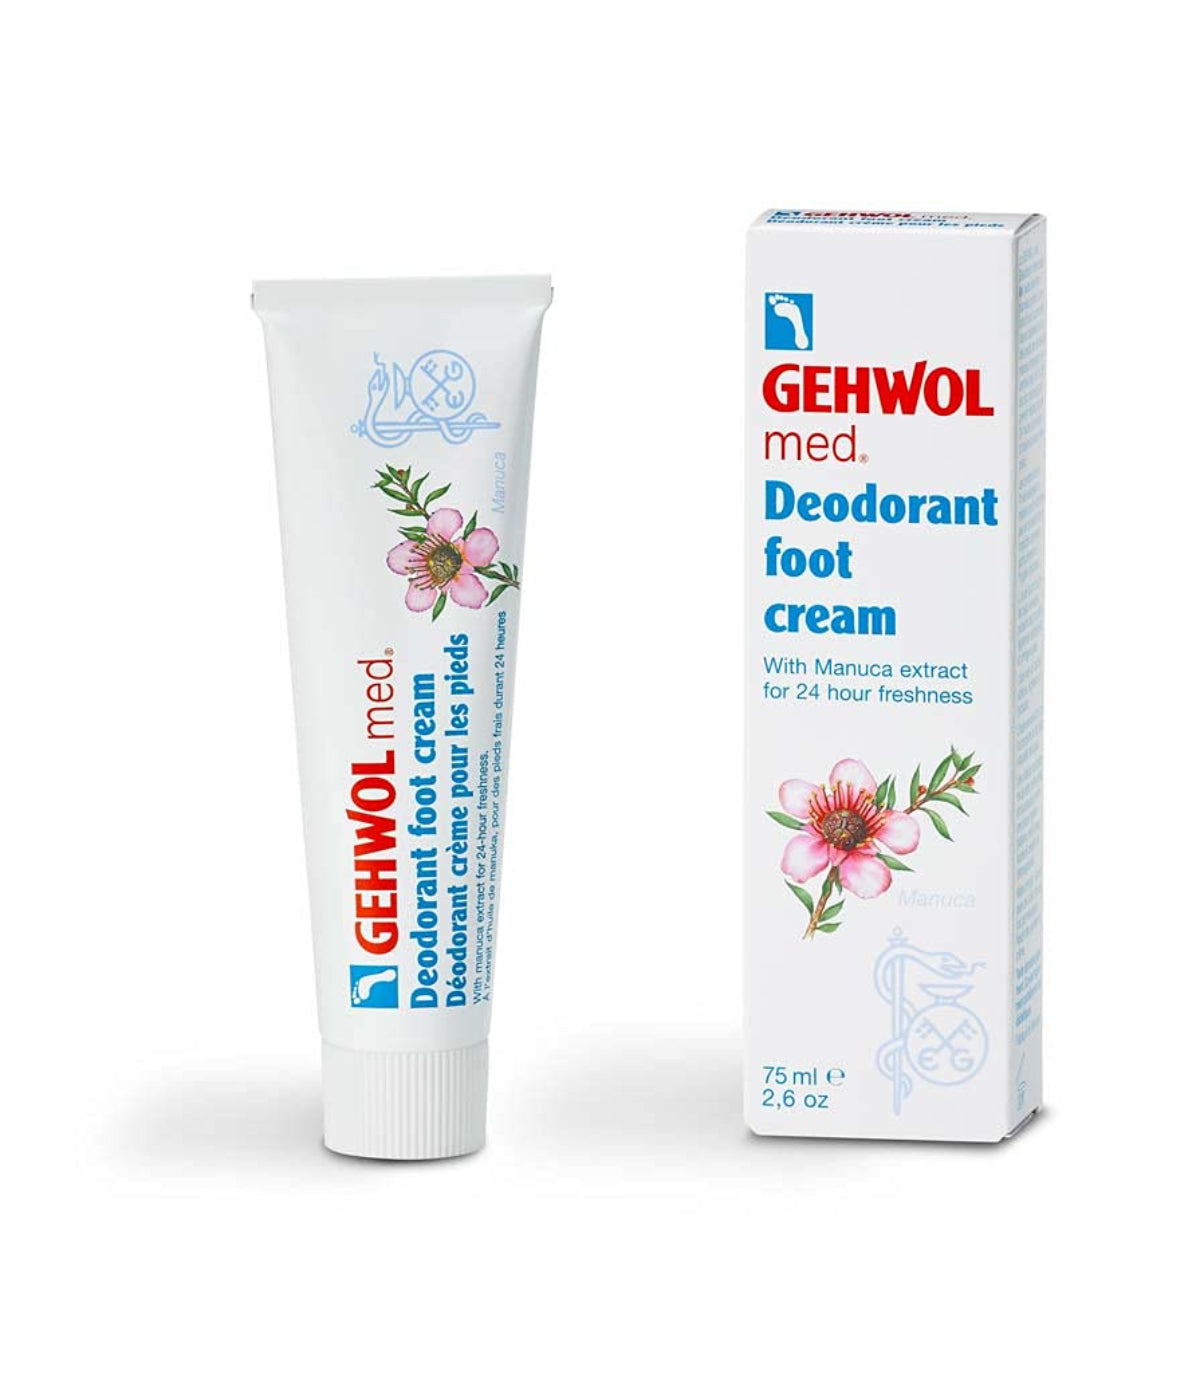 fundament periscoop Vervloekt Gehwol Med Deodorant Foot Cream, 75mL – Pro Beauty Supplies